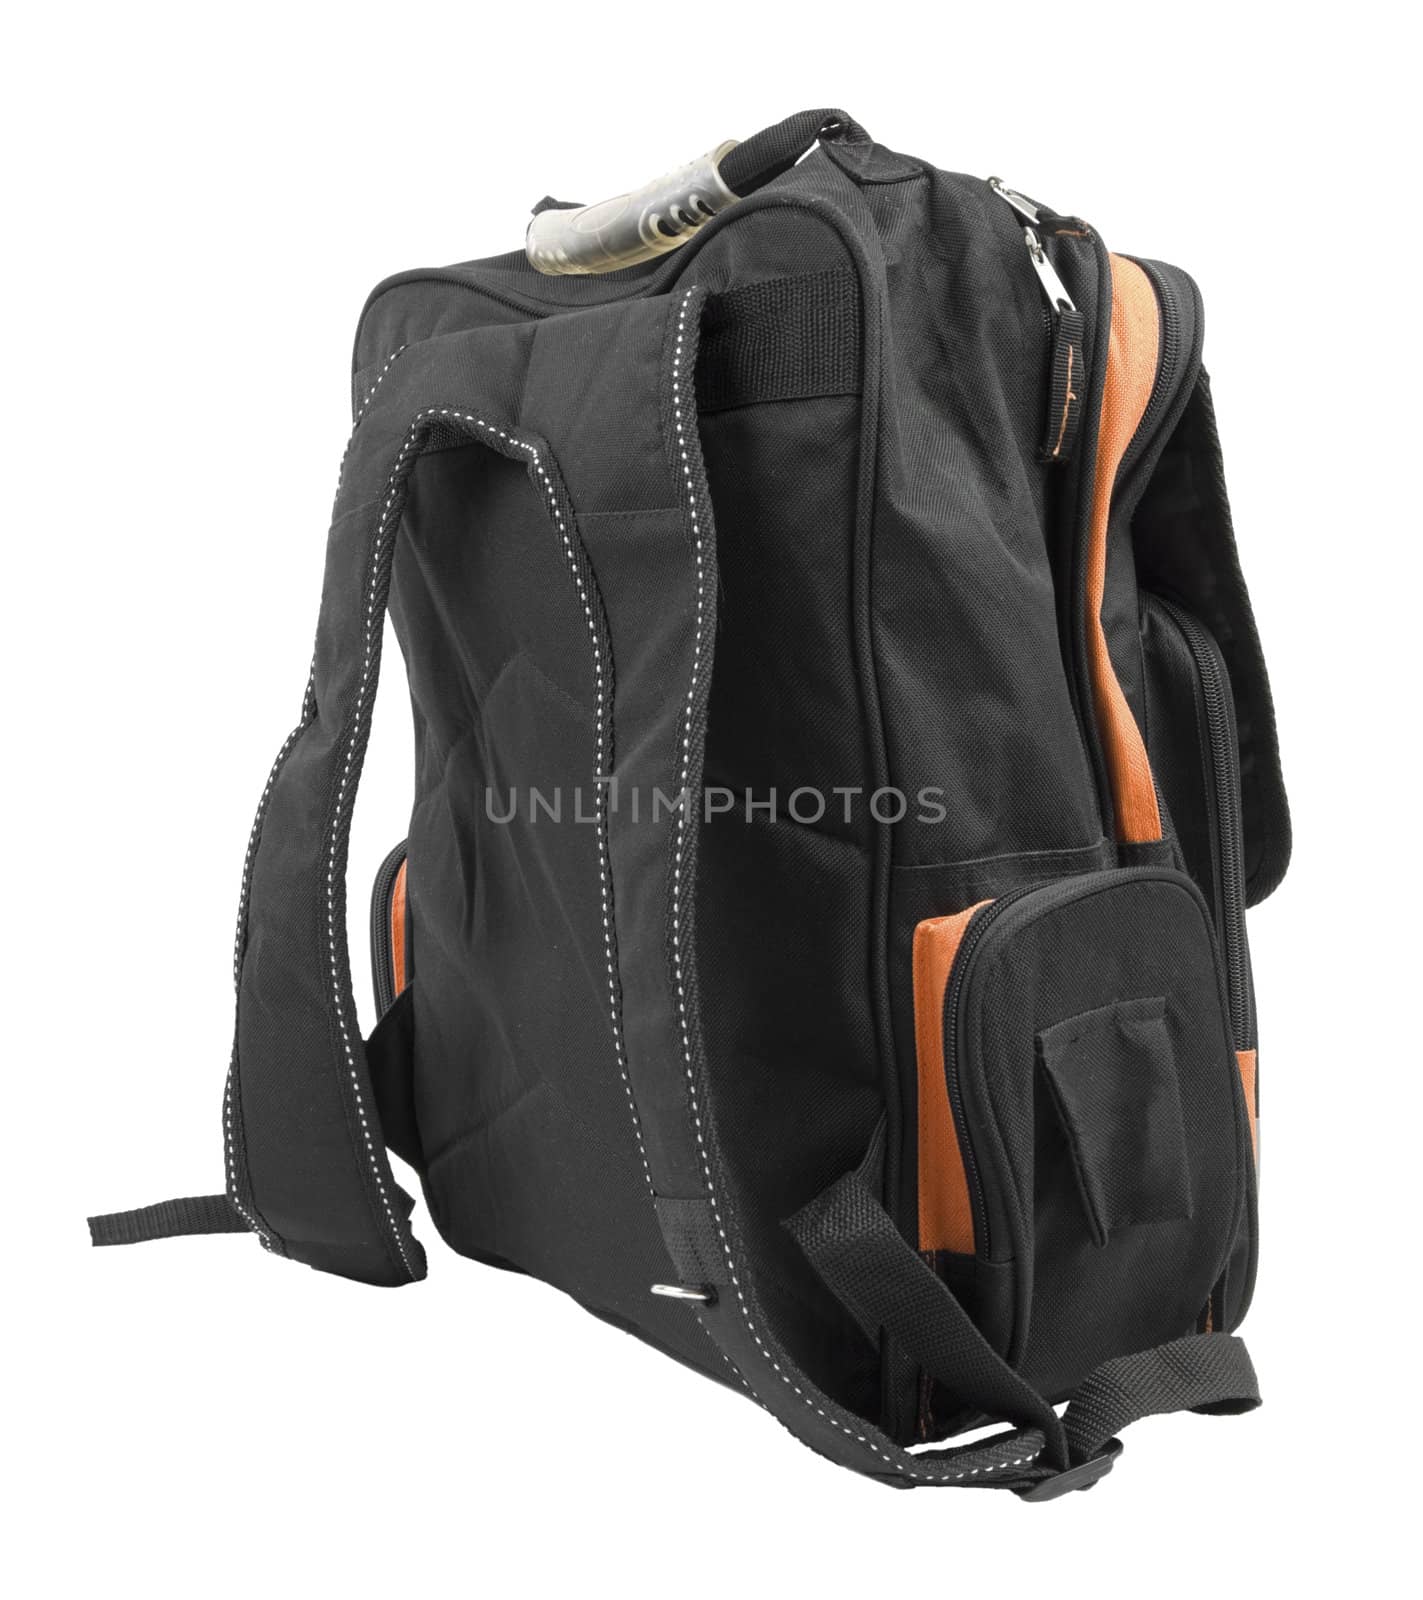 Black Backpack with orange details. Isolated on white background